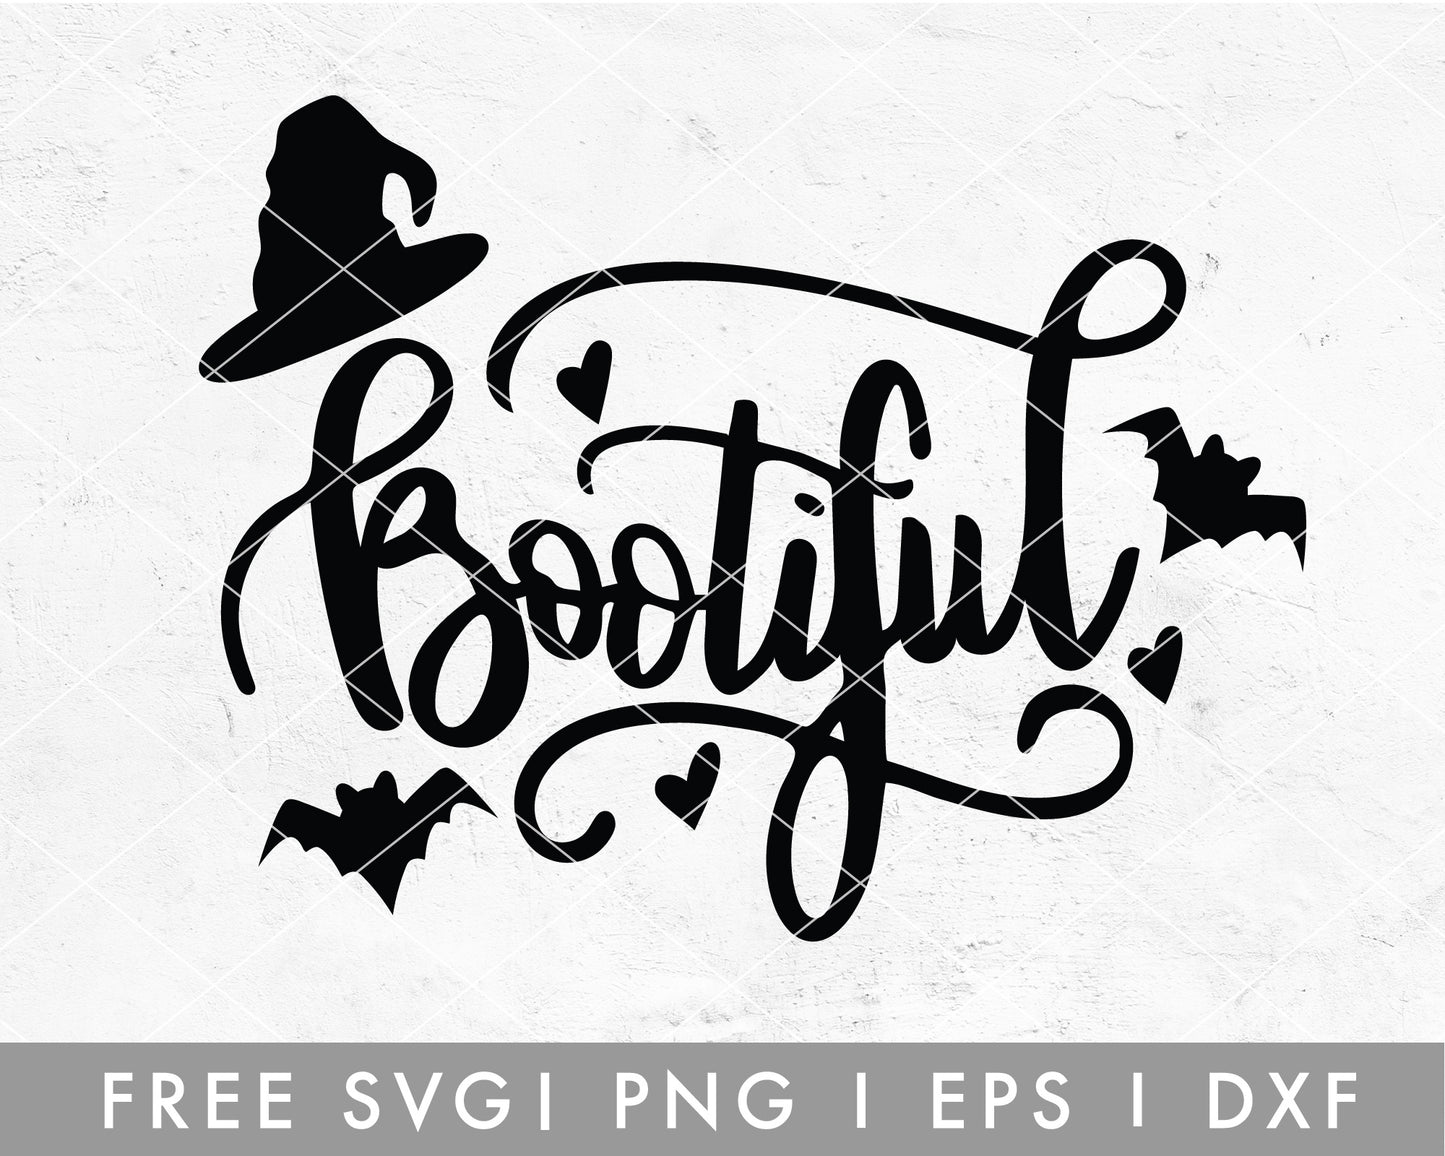 FREE Bootiful SVG Cut File for Cricut, Cameo Silhouette | Halloween SVG Cut File